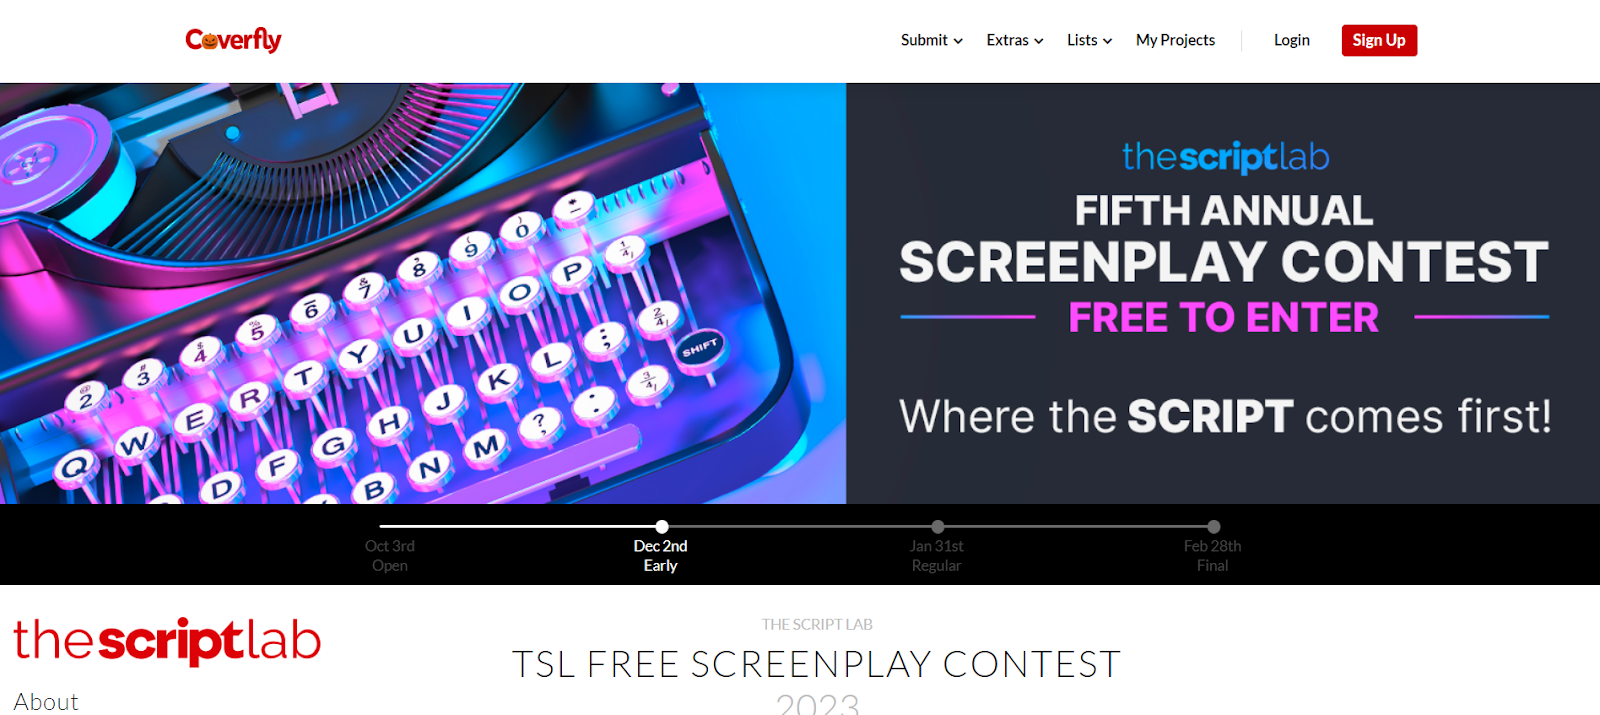 Tsl Free Screenplay Contest: